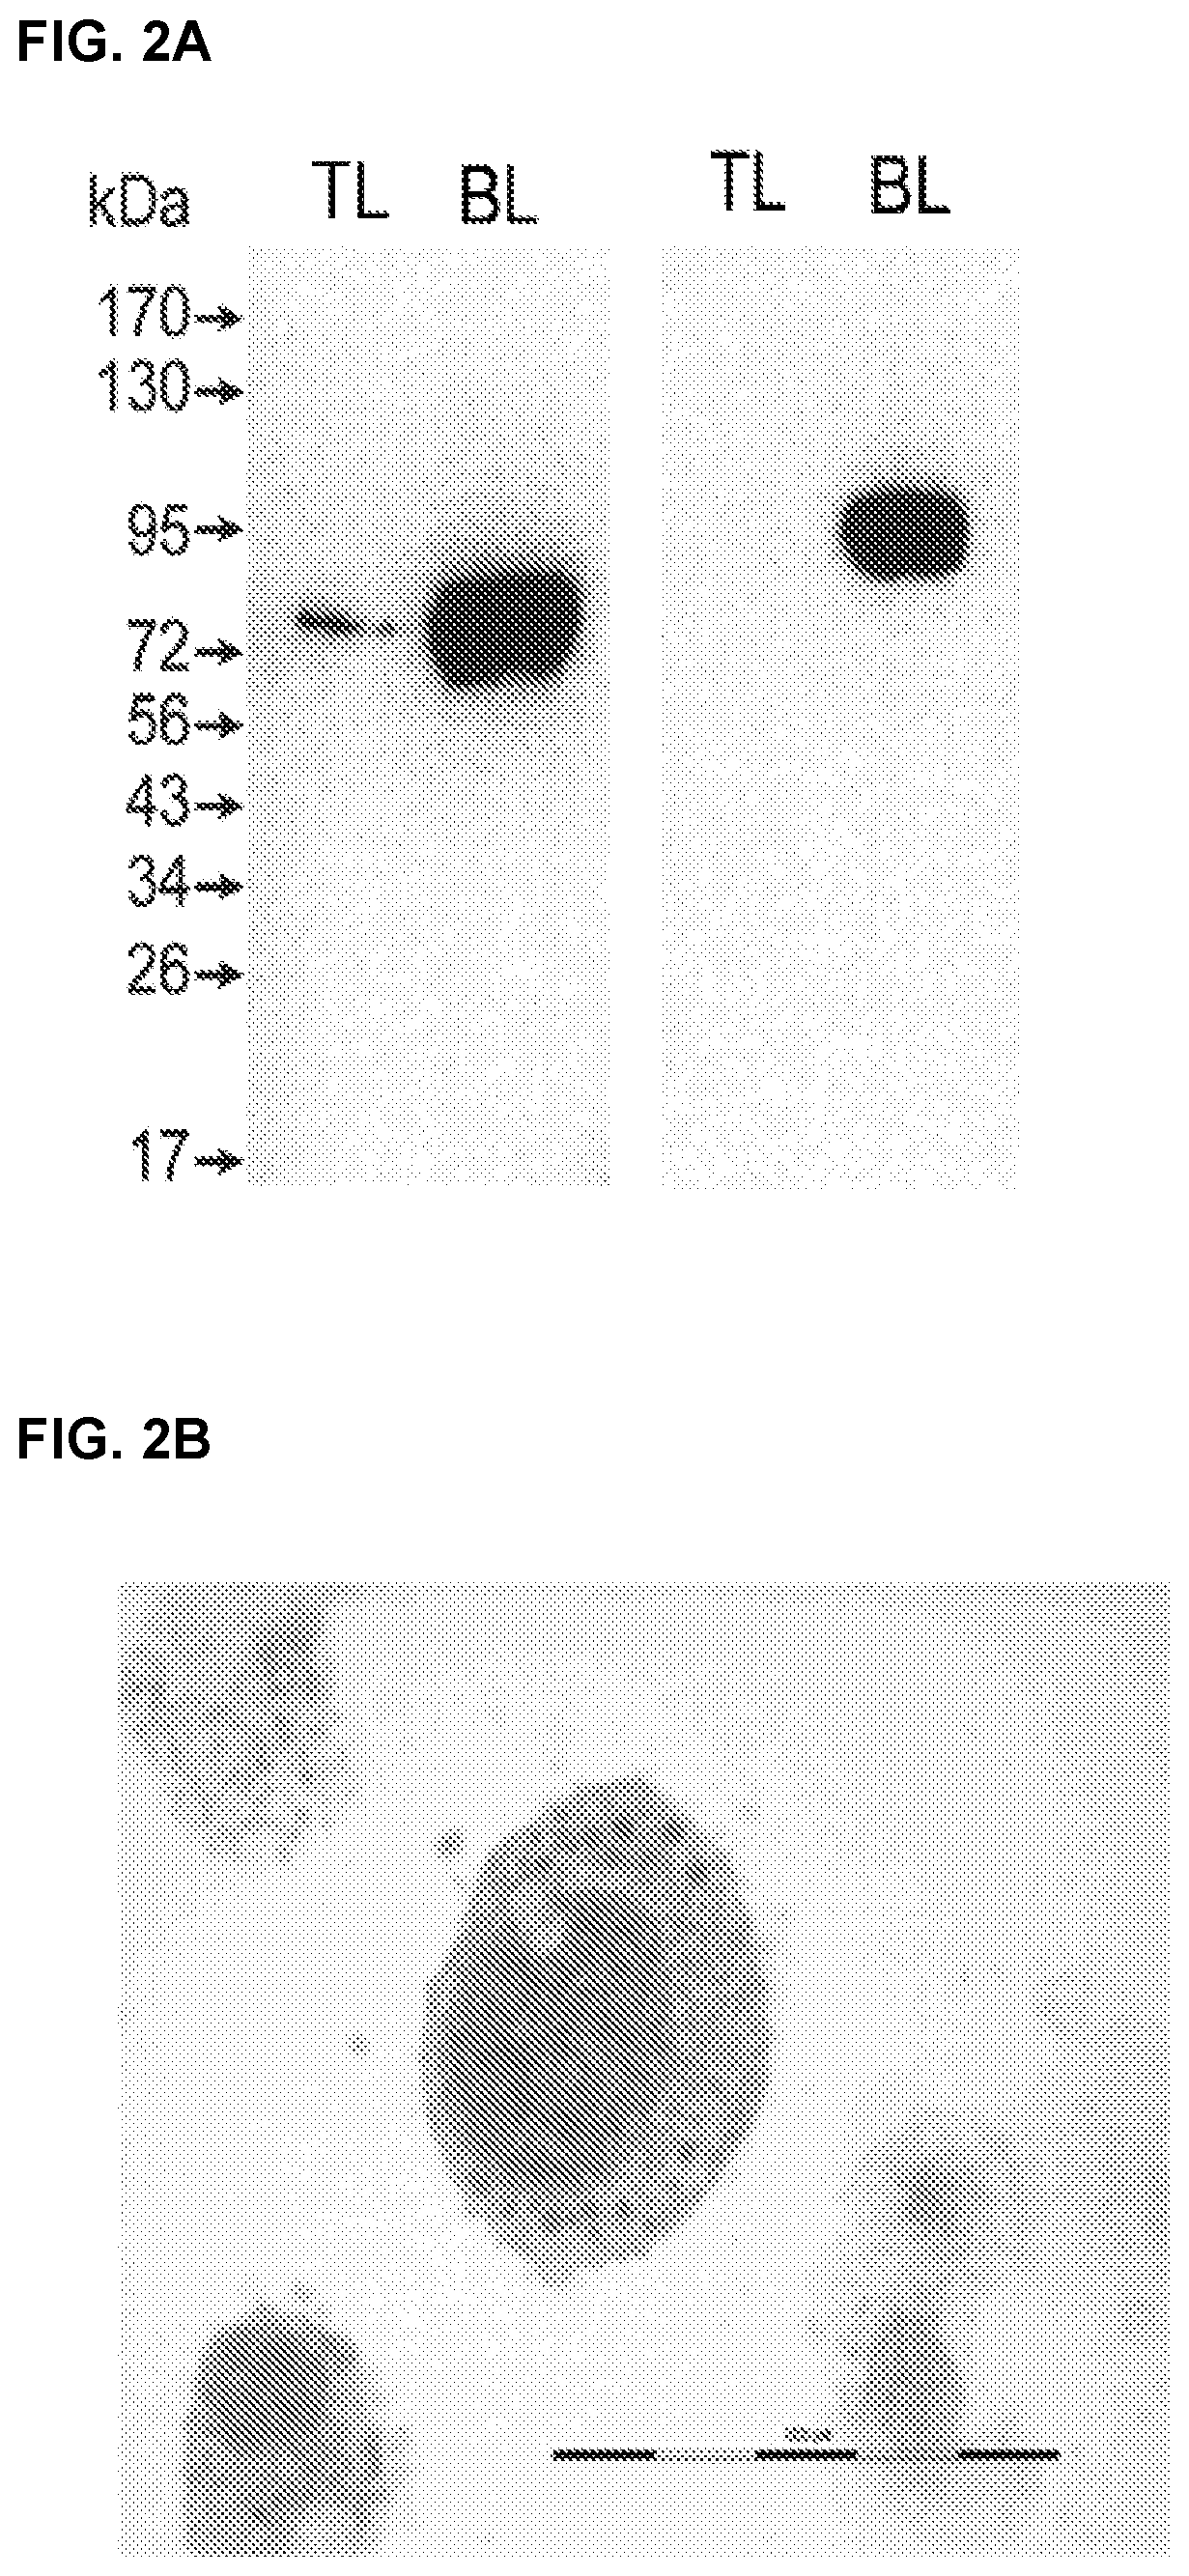 Biosynthetic activity of the anaplasma phagocytophilum and ehrlichia chaffeensis phagosome in a host cell-free medium